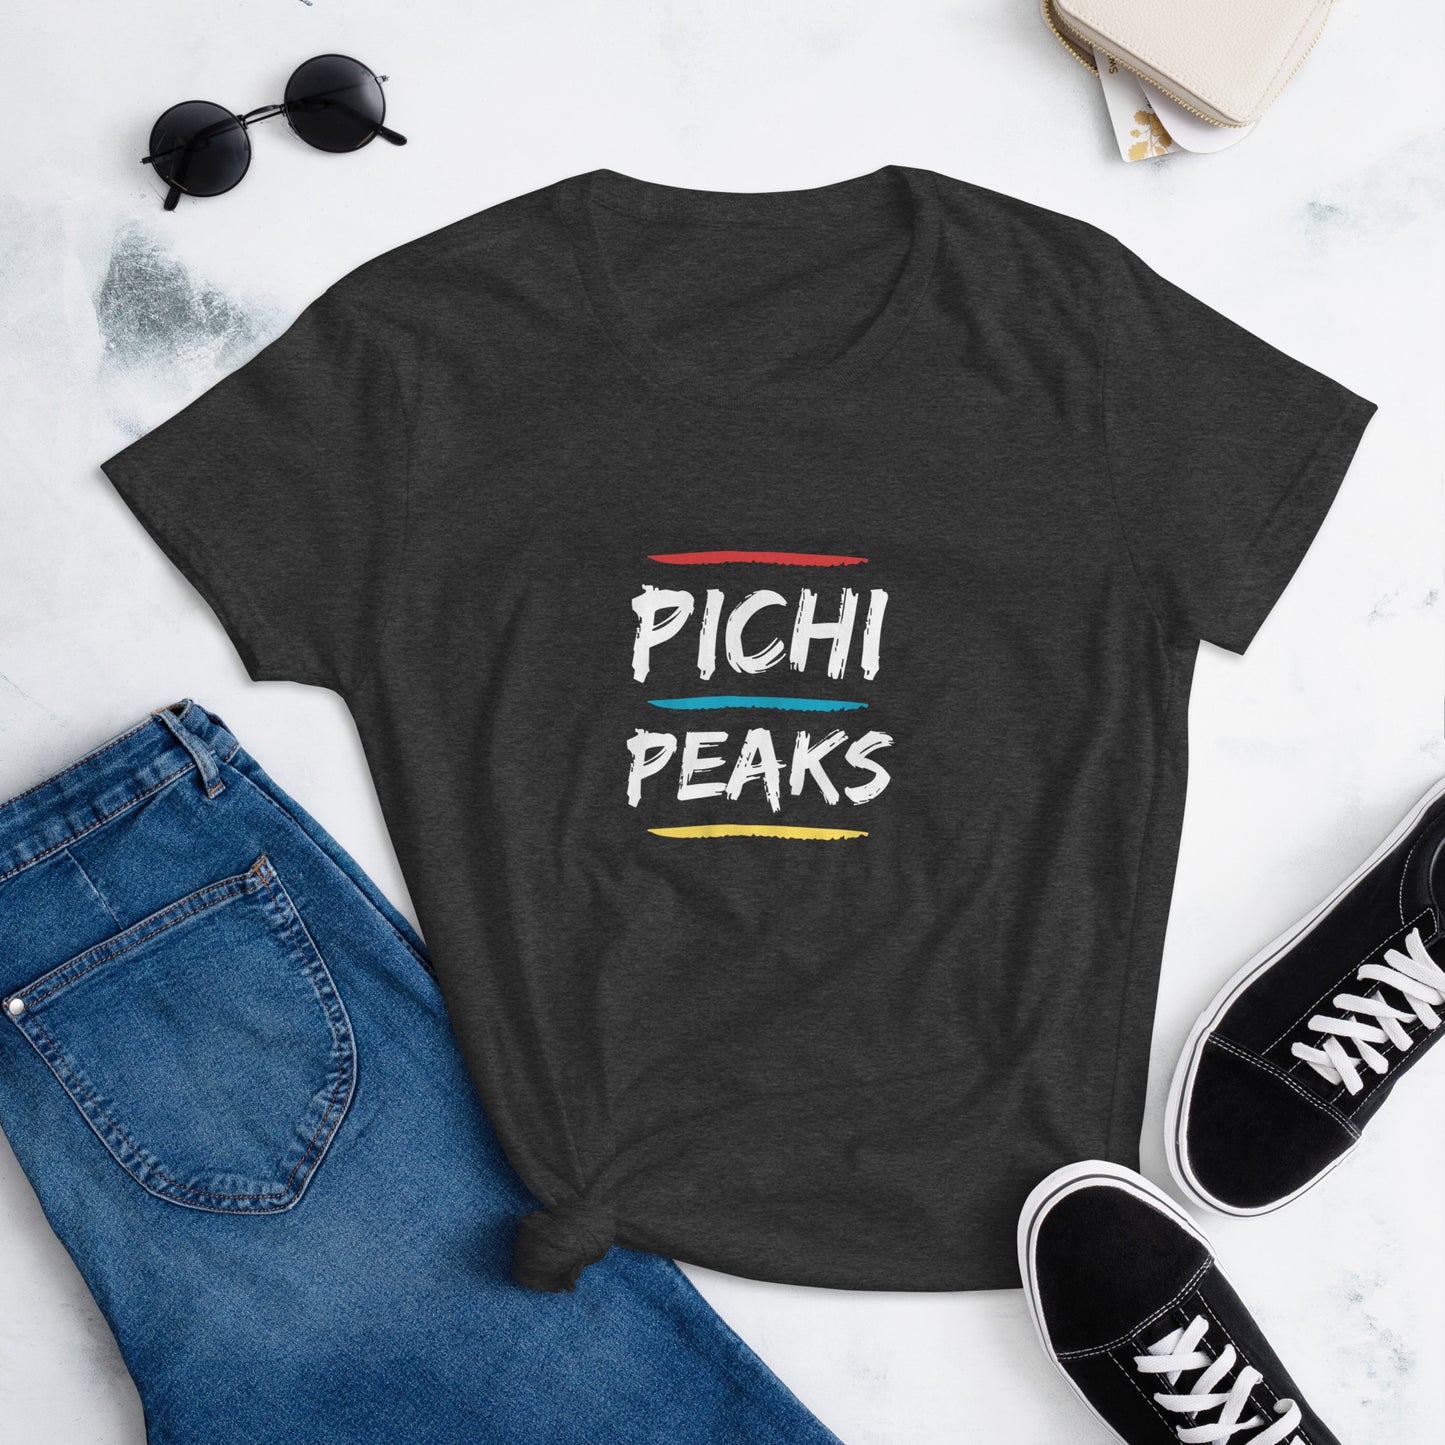 Pichi Peaks Women's short sleeve t-shirt